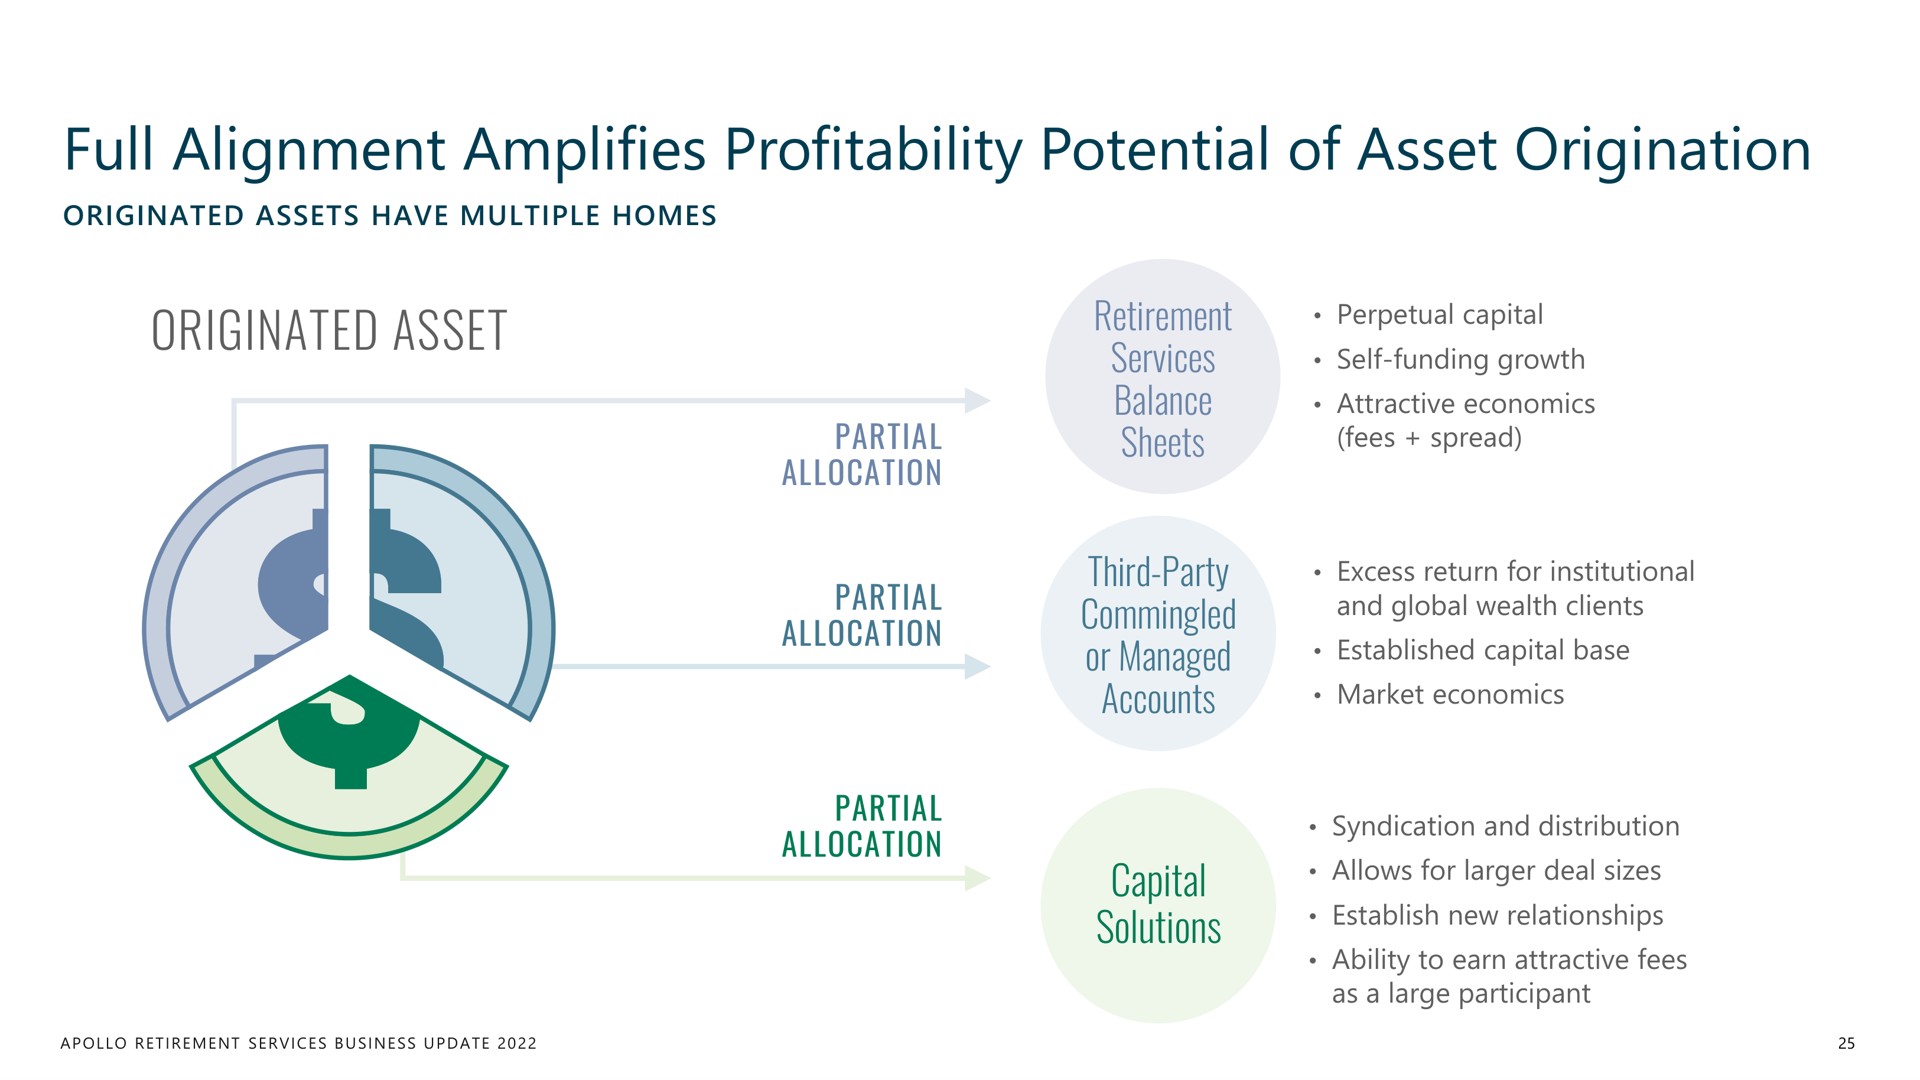 full alignment amplifies profitability potential of asset origination | Apollo Global Management